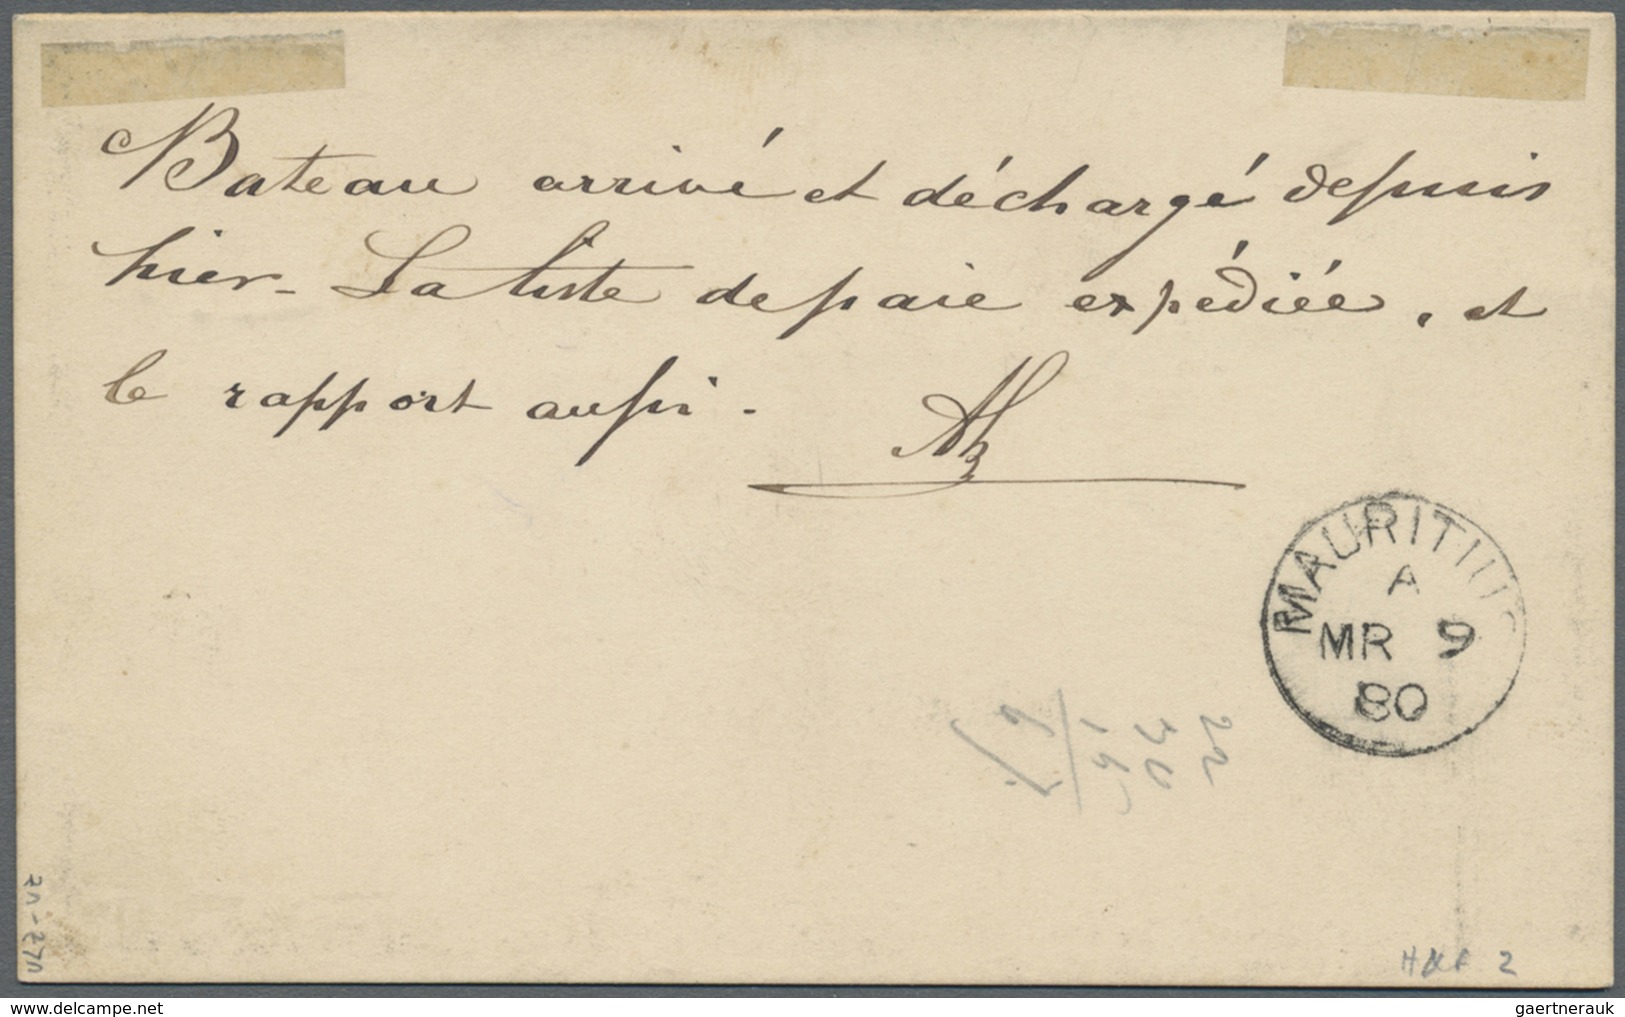 Br Mauritius: 1880: Postal Stationery Formular Card "MAURITIUS POST CARD" Franked With 2c Stamp (SG 83) - Maurice (...-1967)